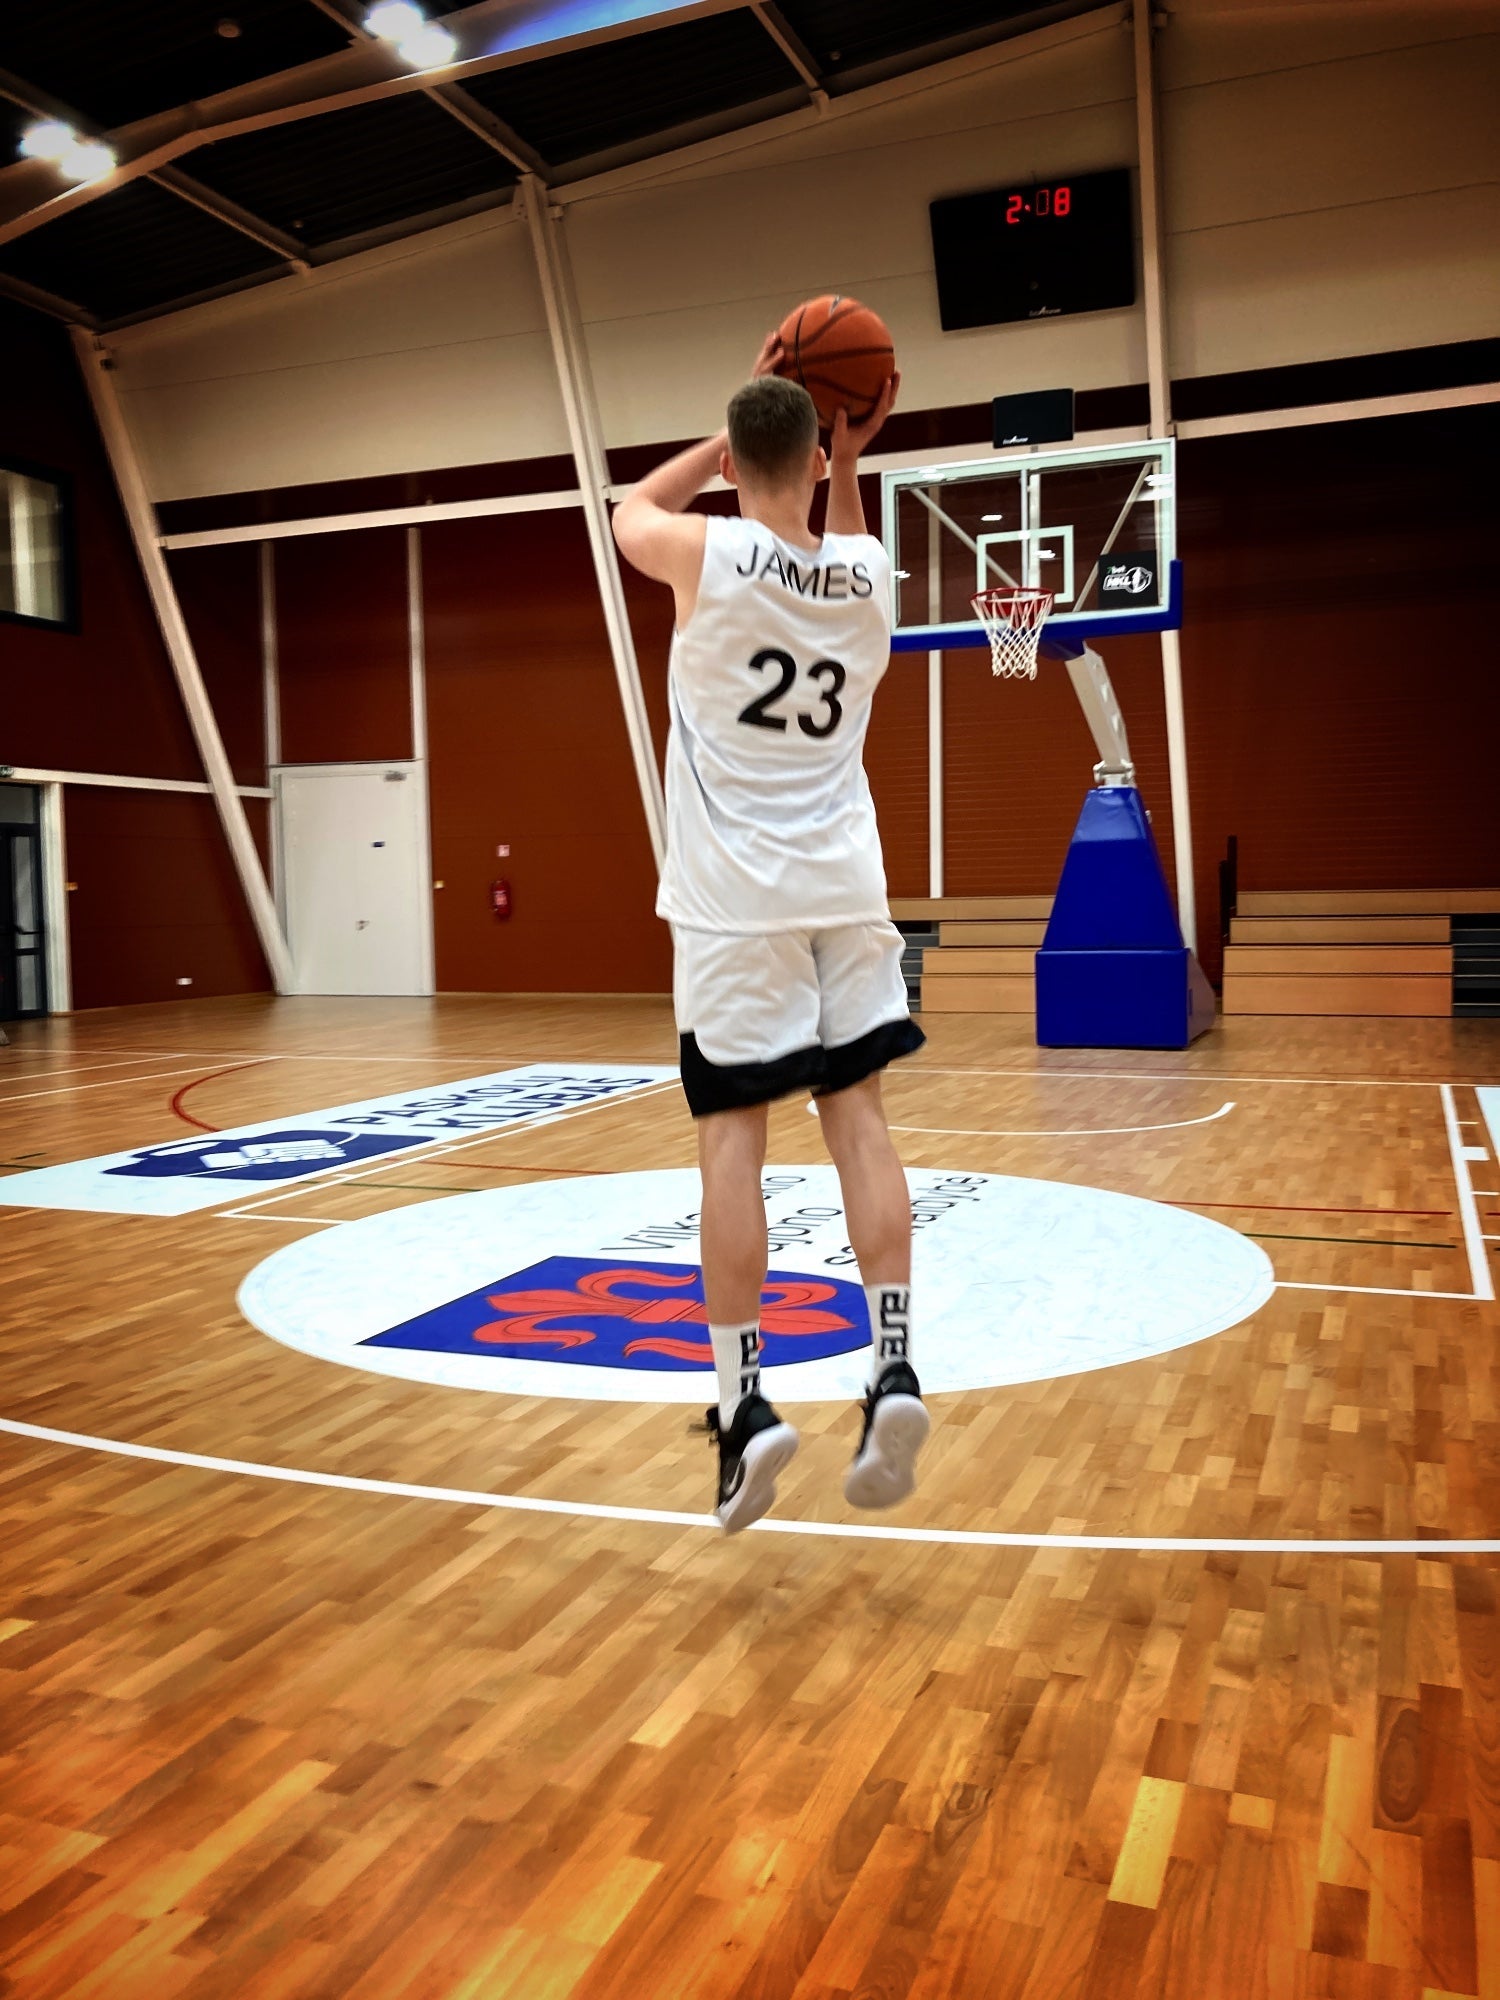 Skeleton réversible tenue de basket-ball – BasketUNO®